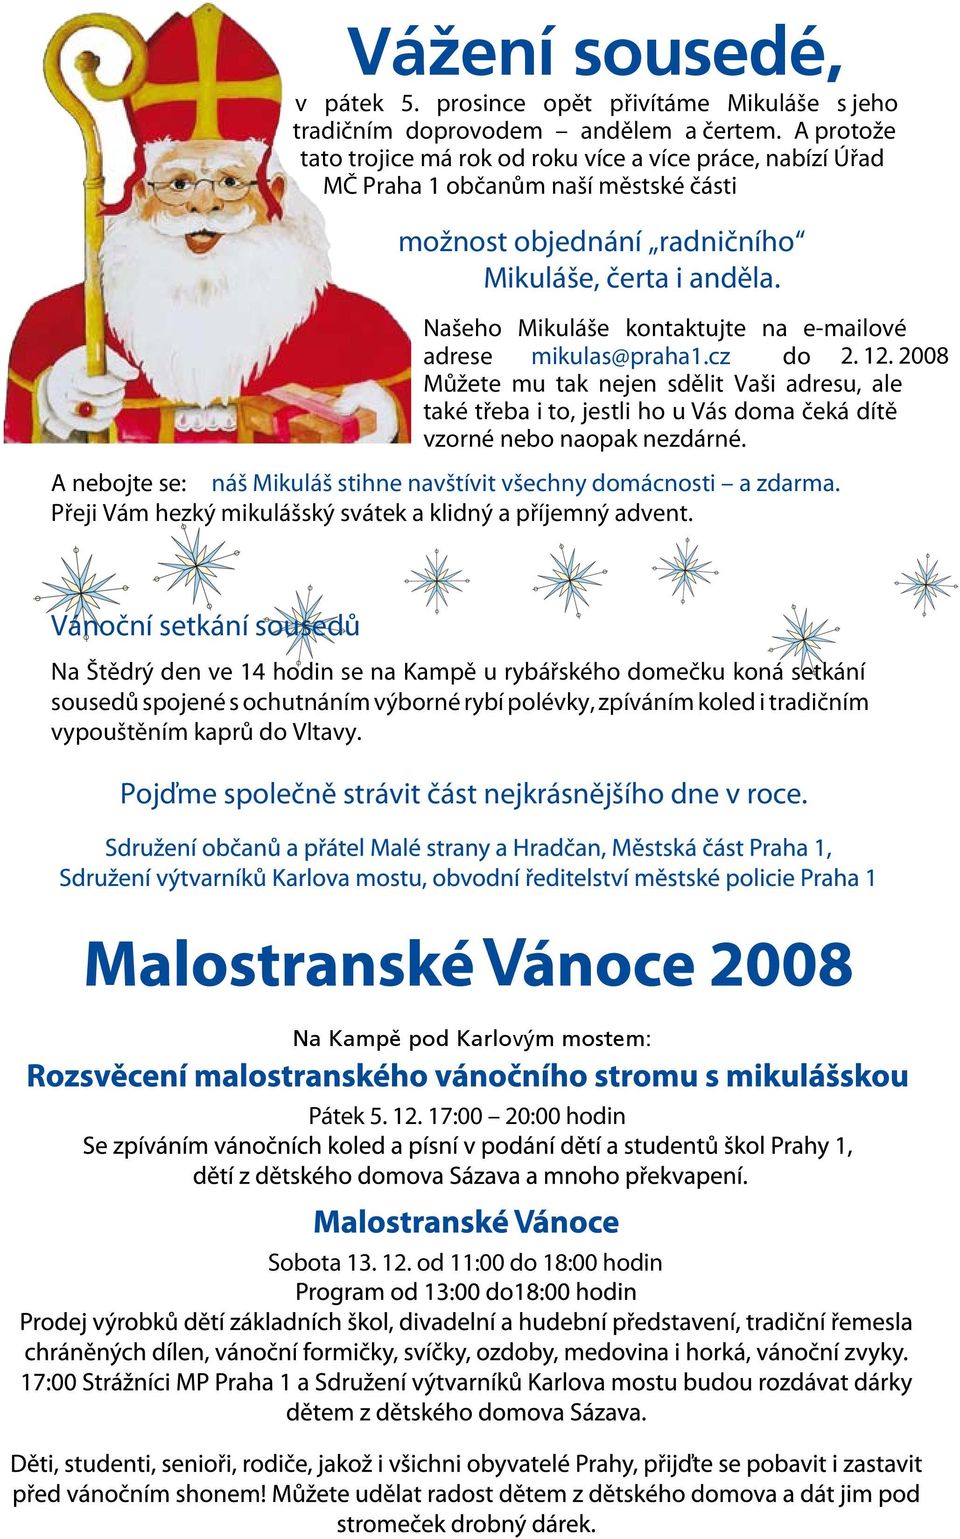 Našeho Mikuláše kontaktujte na e-mailové adrese mikulas@praha1.cz do 2.12.2008.